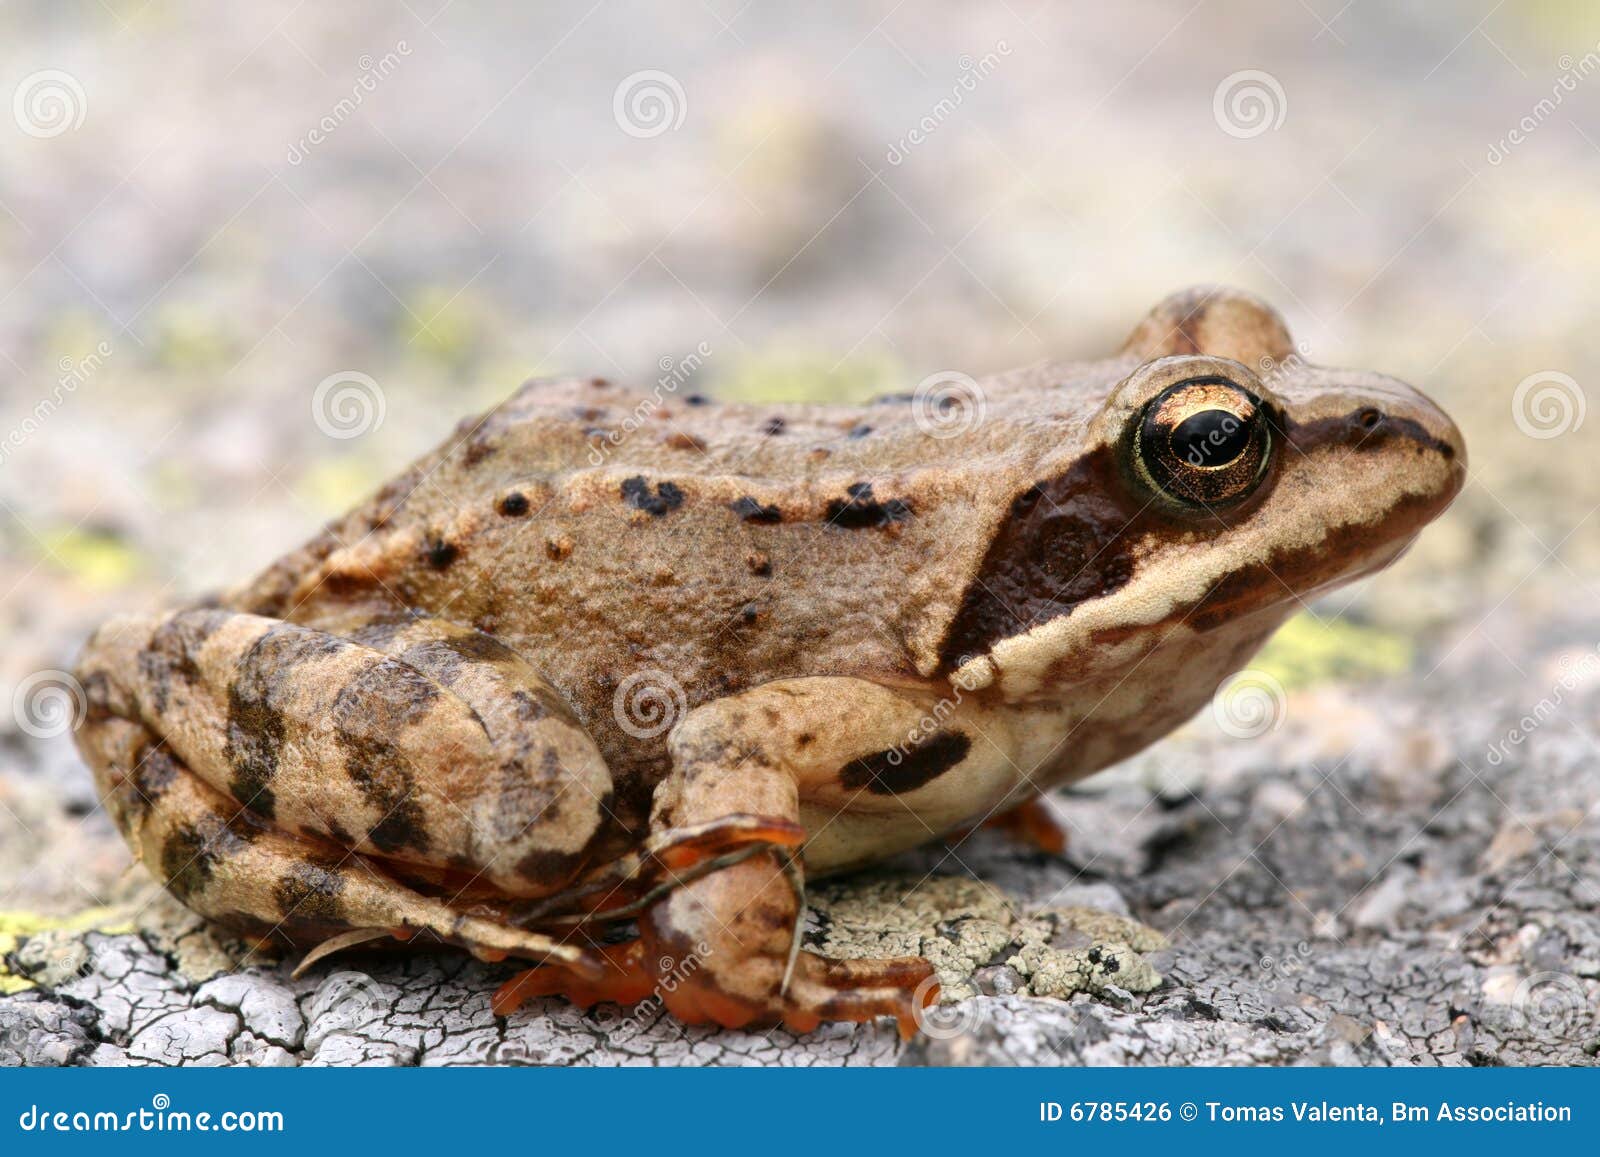 brown frog rana temporaria